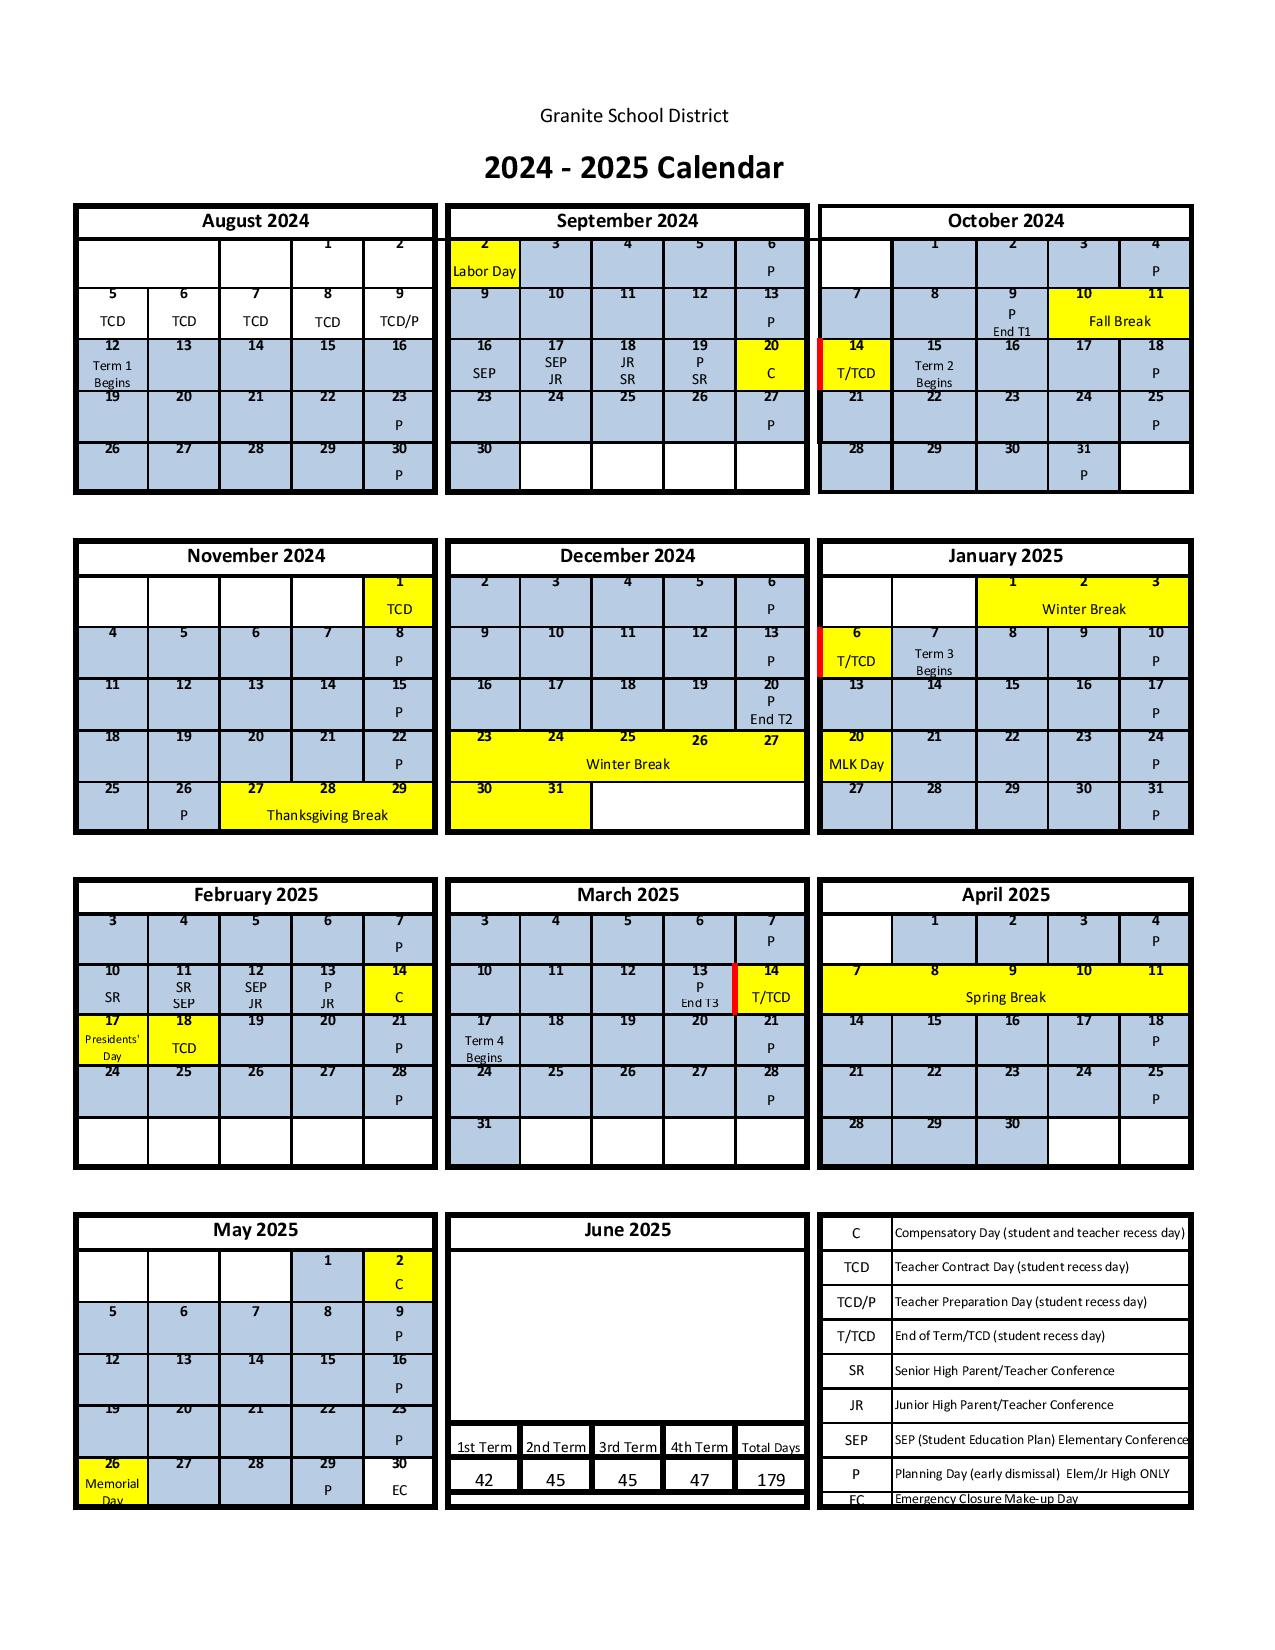 Granite School District Calendar Holidays 20242025